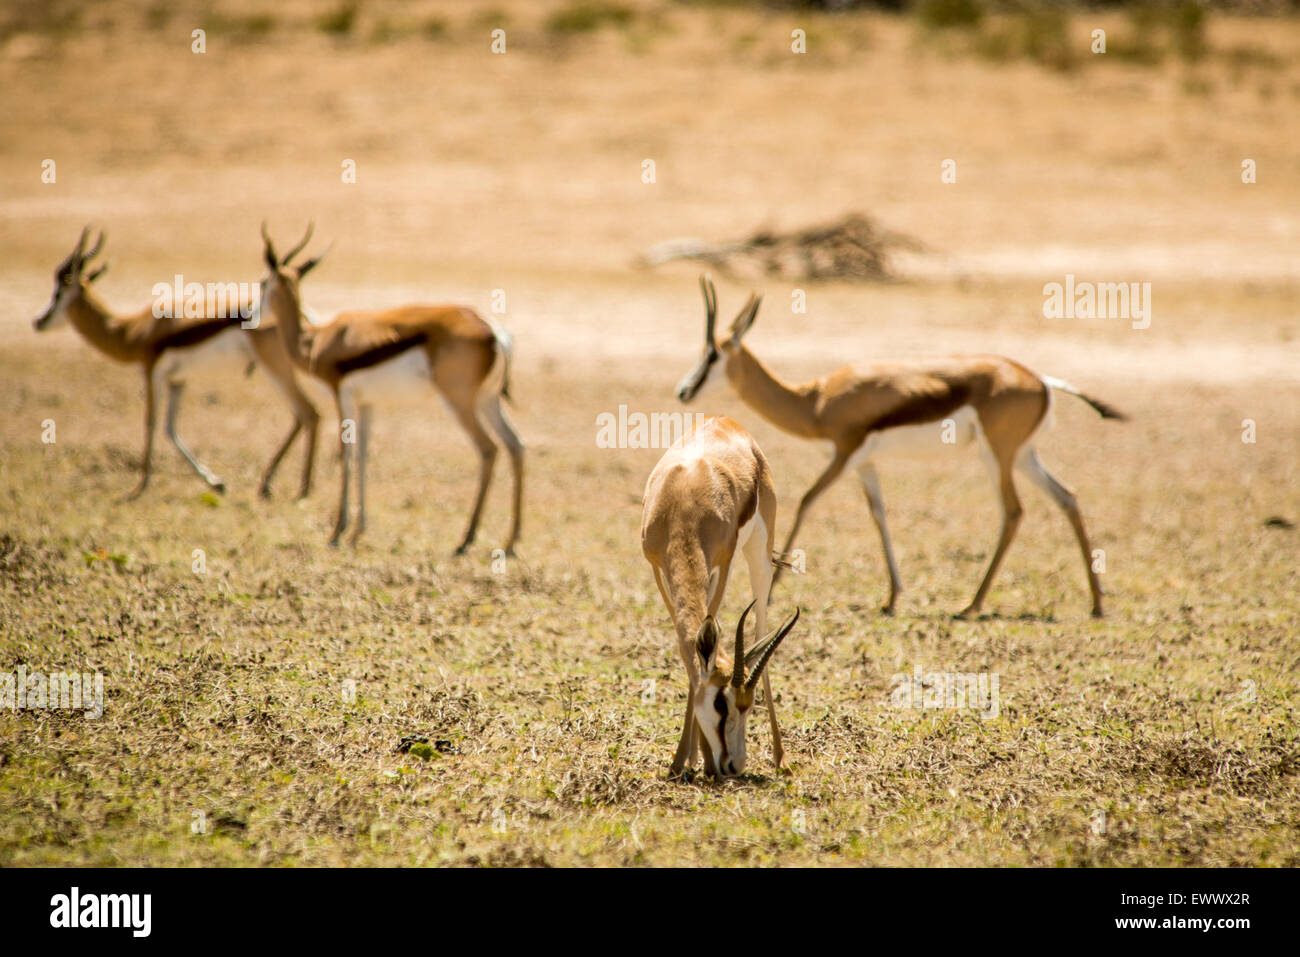 South Africa - Springbok roaming together through the Khalagadi Transfrontier Park Stock Photo